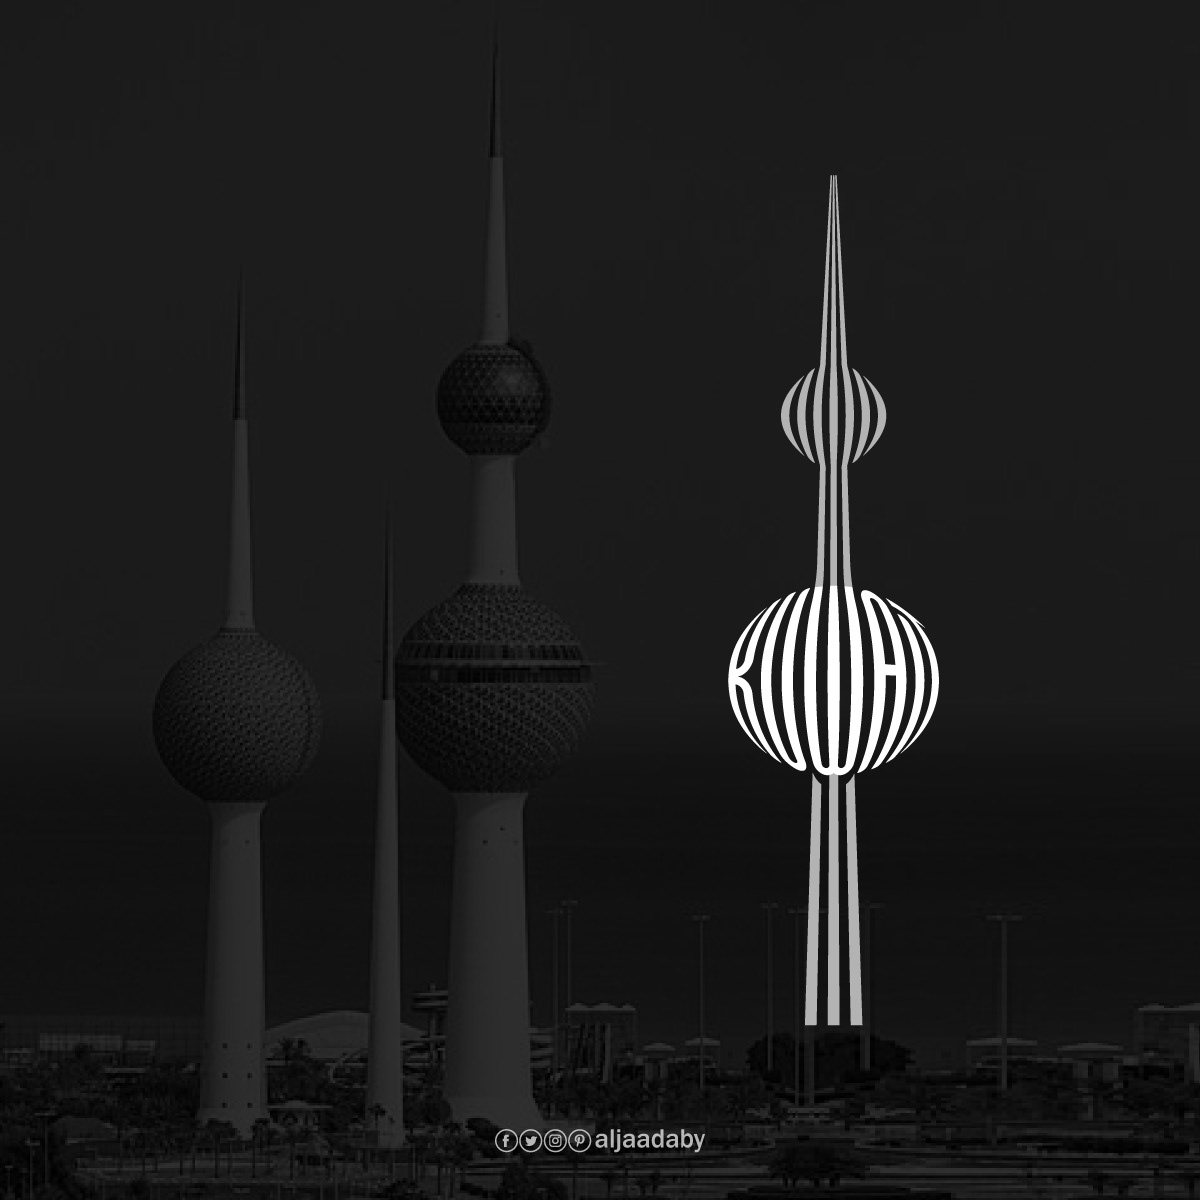 Typographic city logos based on their famous landmarks - Kuwait